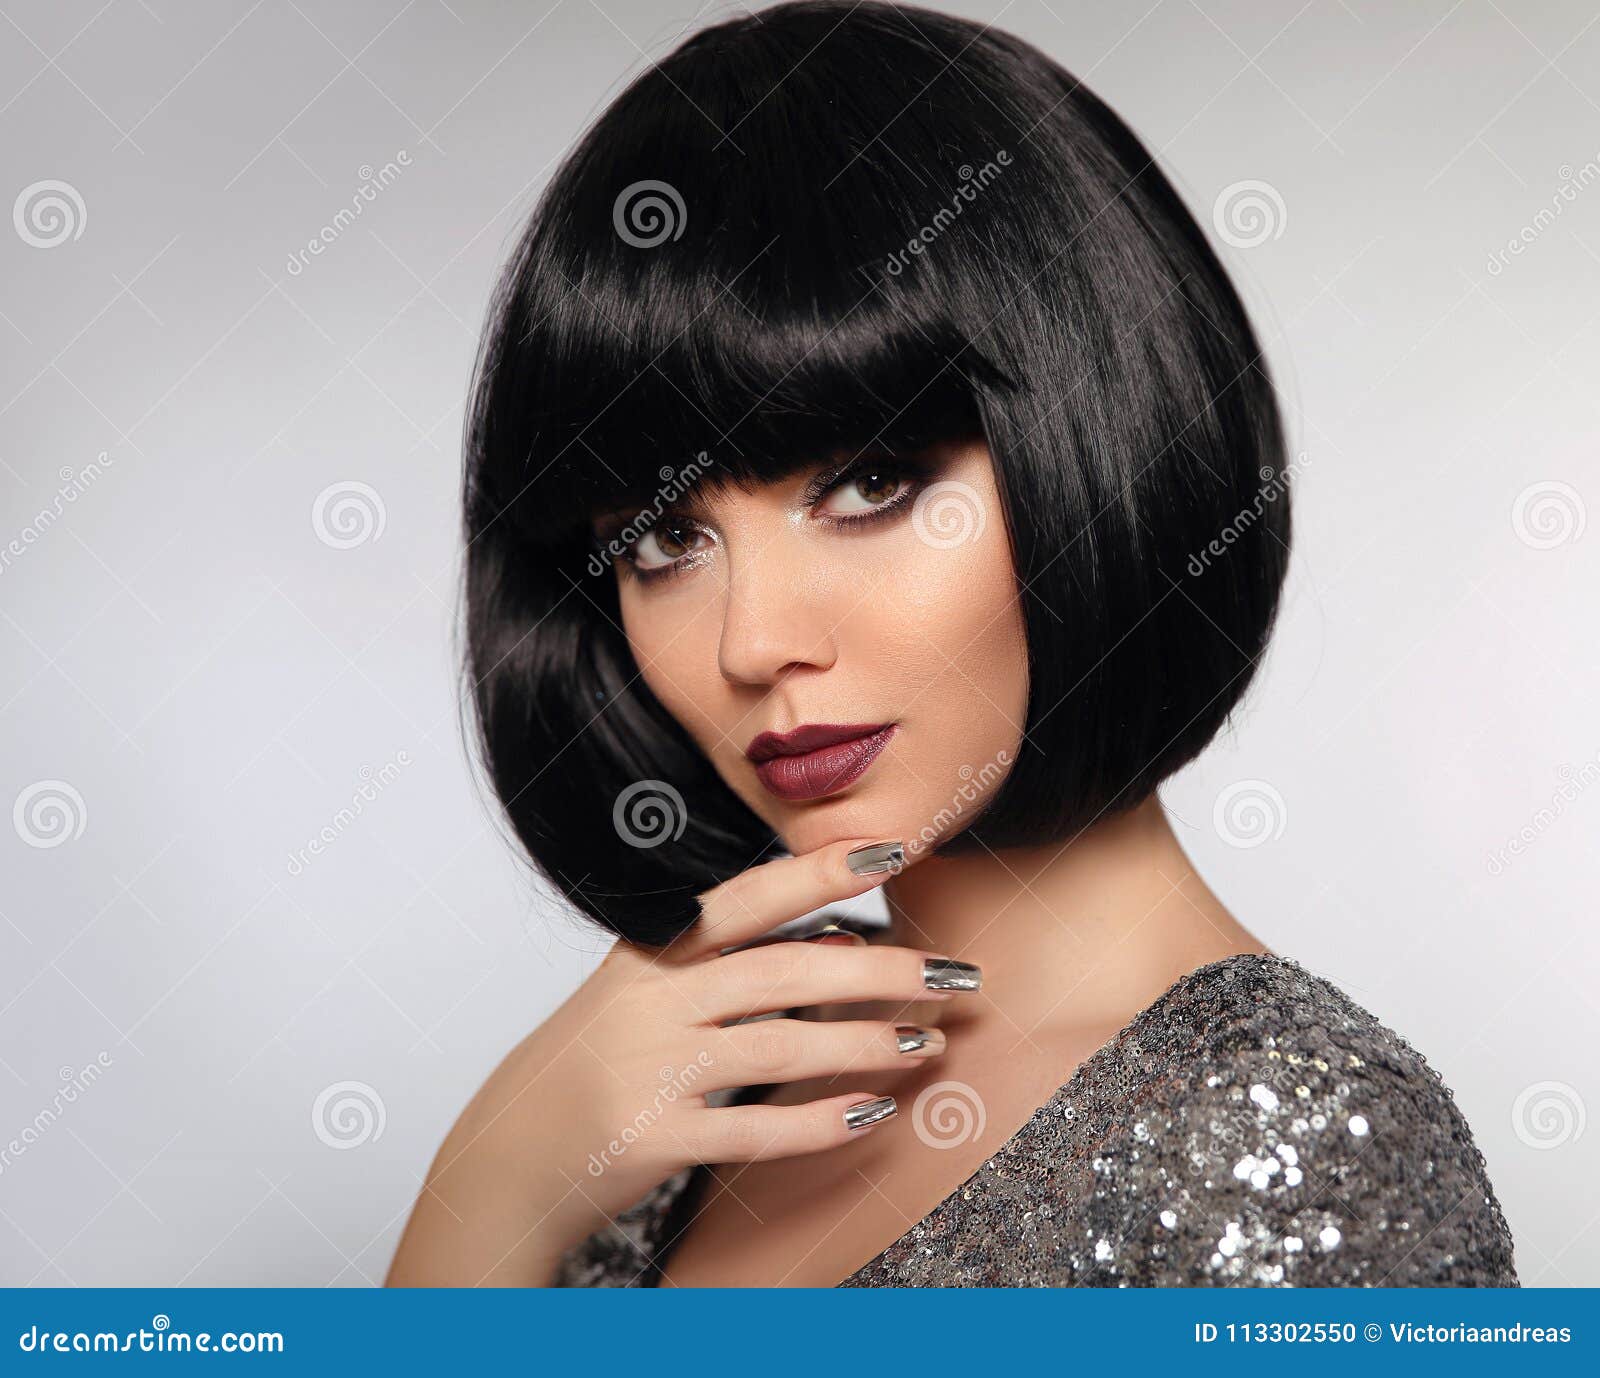 black bob hairstyle. beauty makeup, silver manicured polish nail